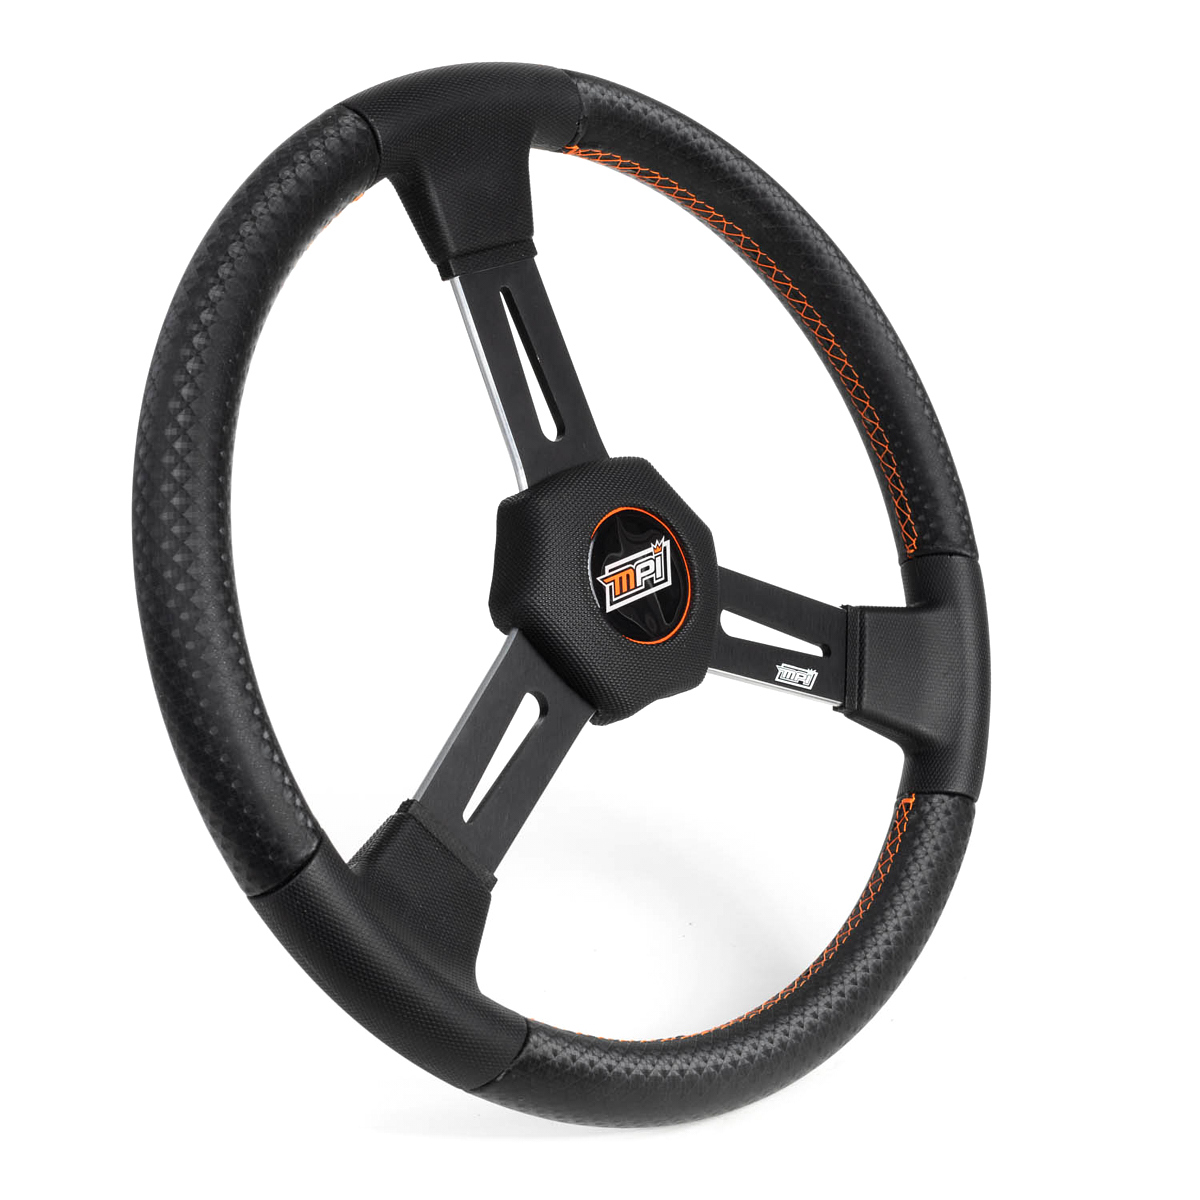 MPI USA MPI-D3-15 Steering Wheel, Dirt, 15 in Diameter, Flat, 3-Spoke, Black Polyurethane Grip, Aluminum, Black Anodized, Each